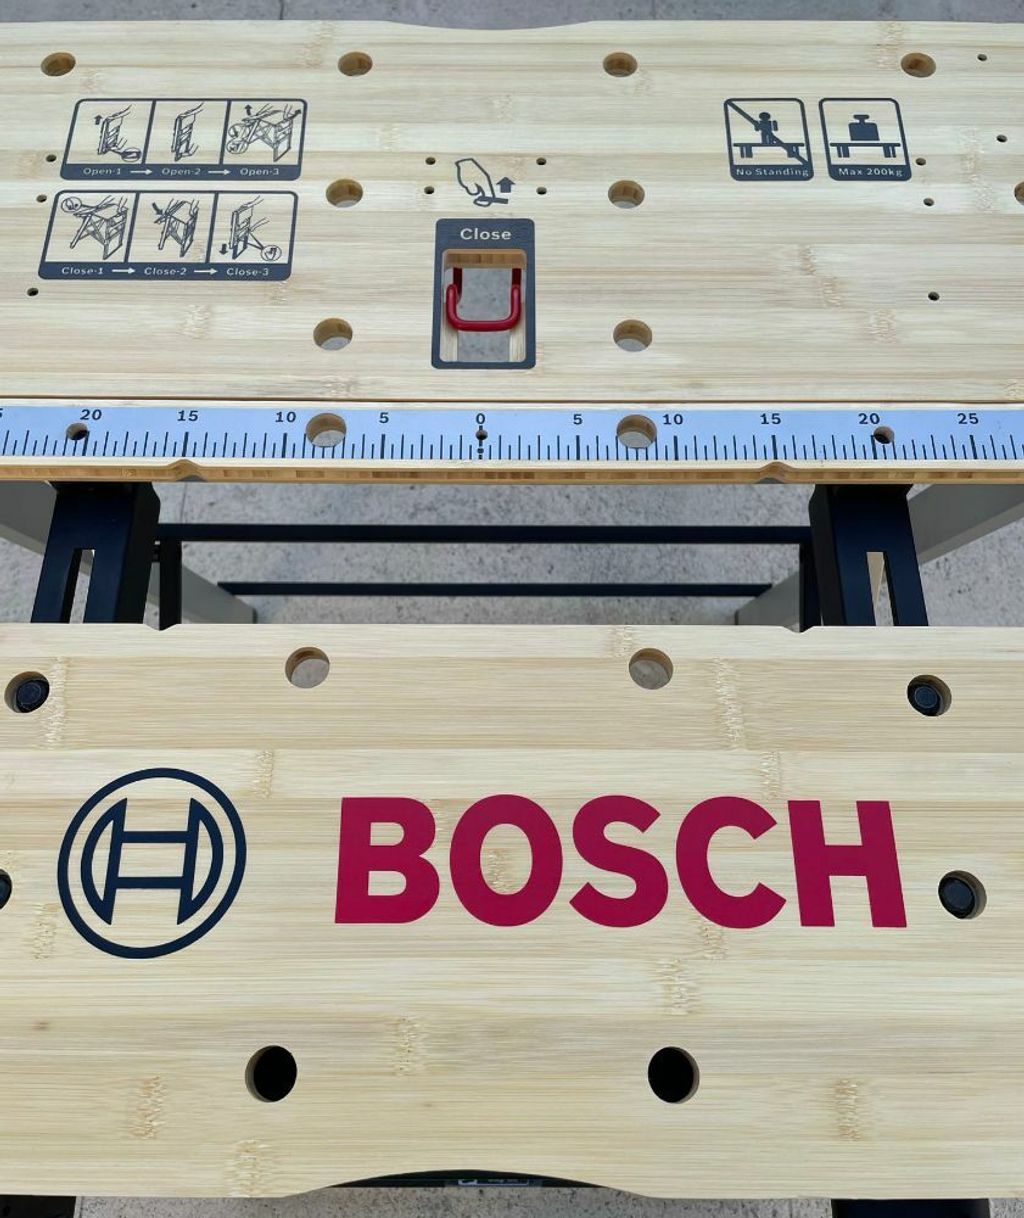 Bosch-workbench-Review-09